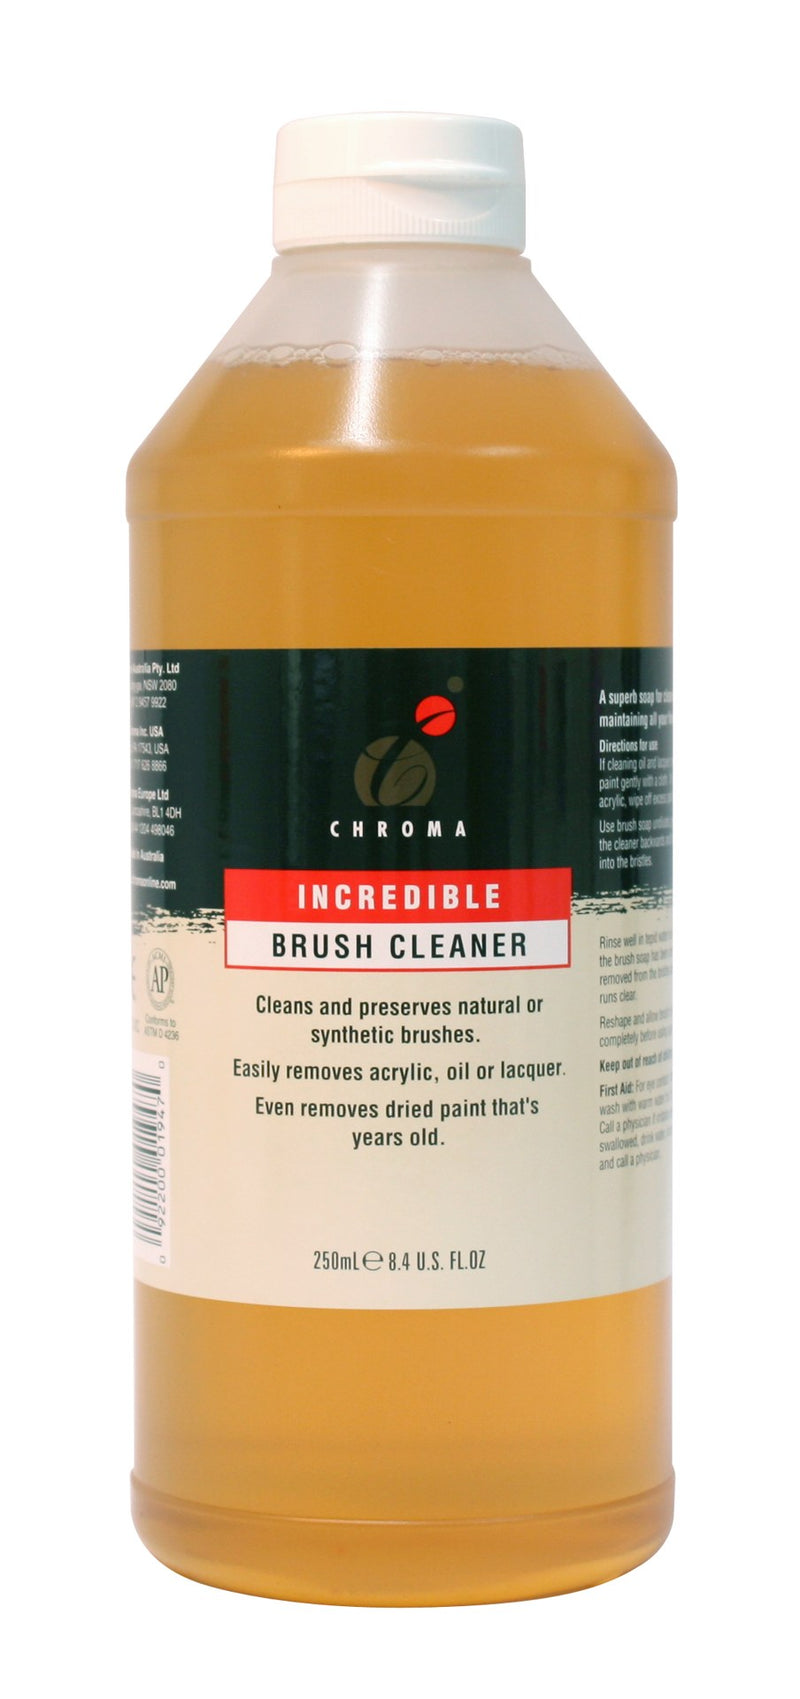 Chroma Incredible Brush Cleaner 1 Litre